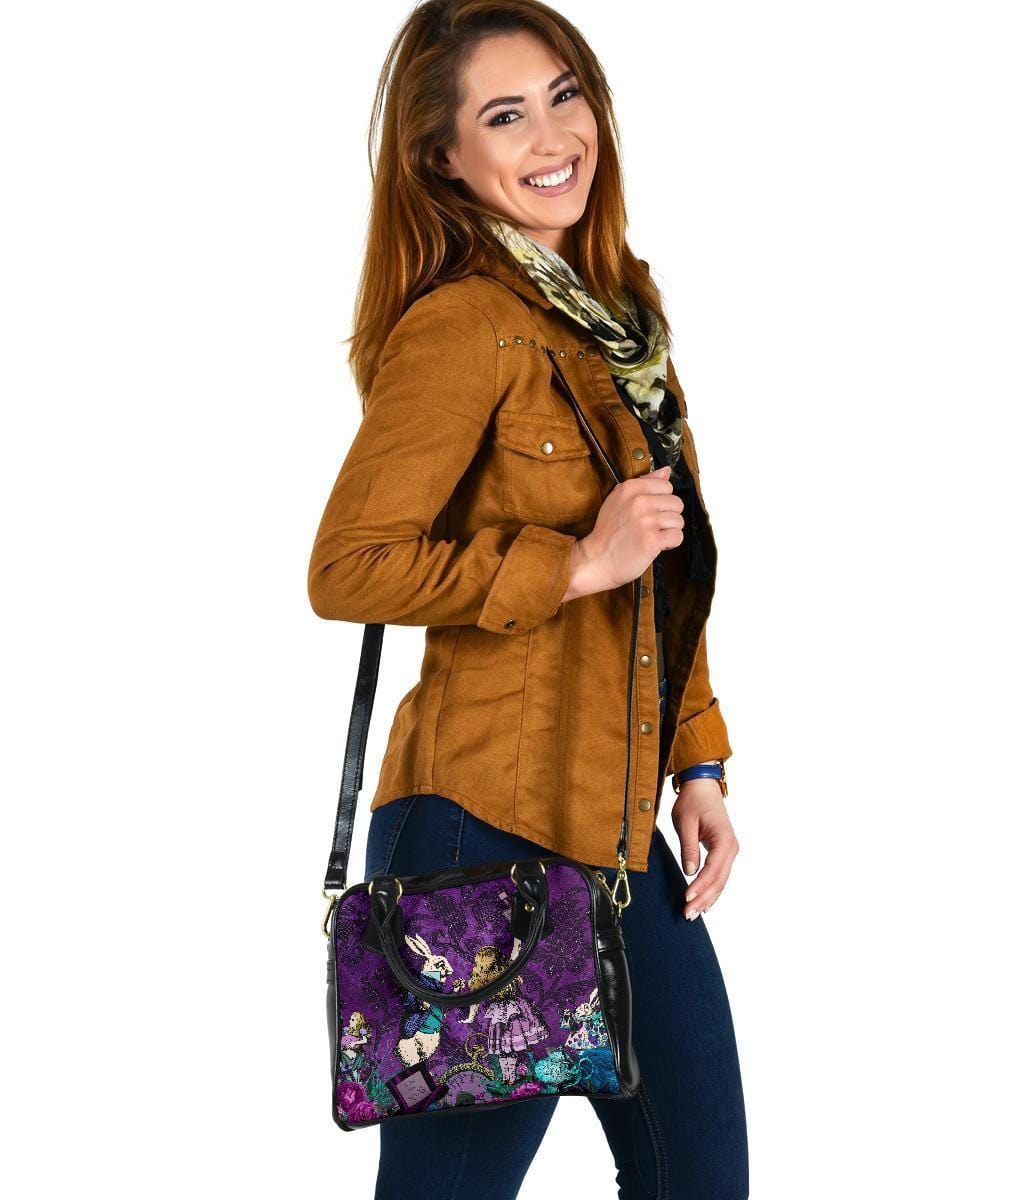 woman wearing the Gothic cute Alice in Wonderland vegan handbag on a purple damask pattern background over her shoulder